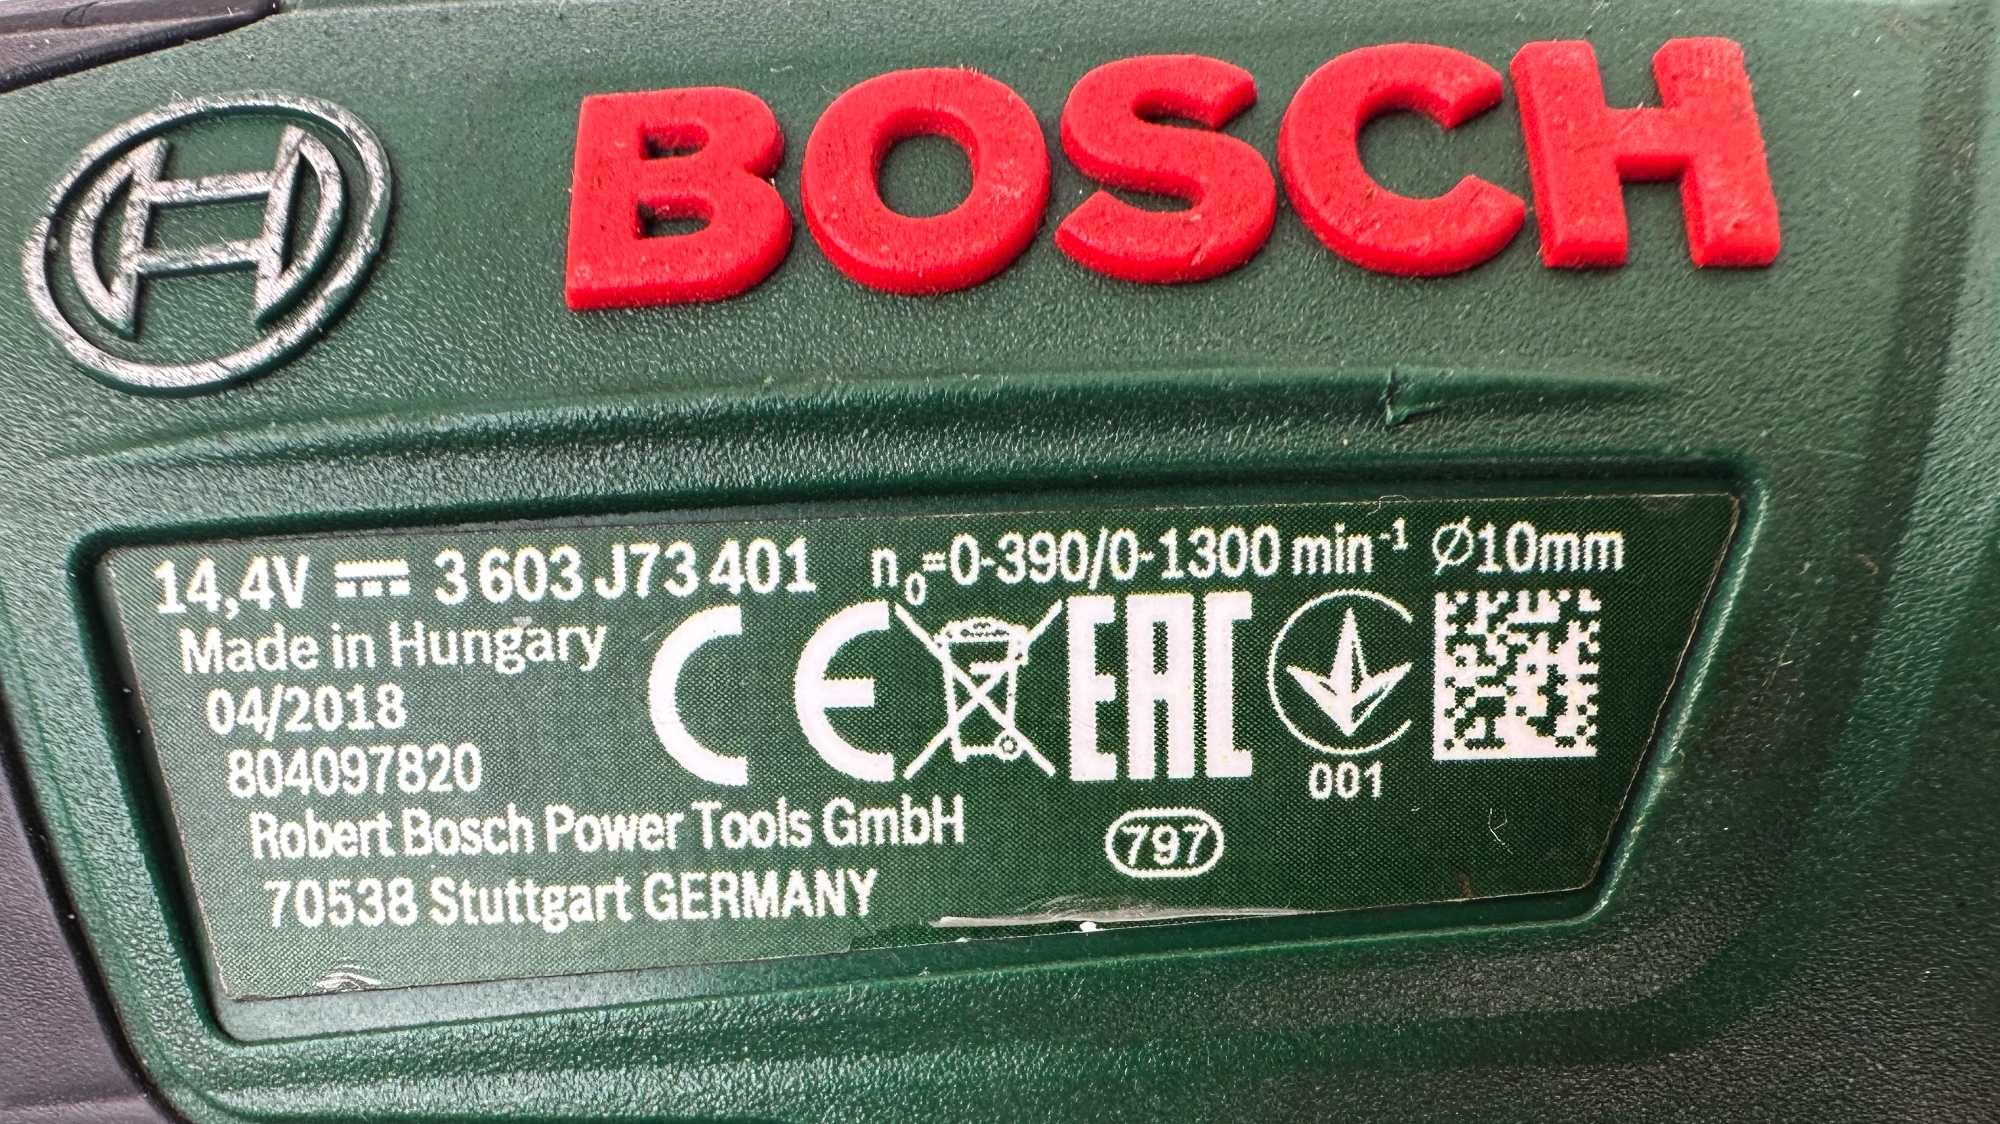 Bosch PSR 14.4 Li-2 - Akумулаторен винтоверт 14.4V 2.5Ah